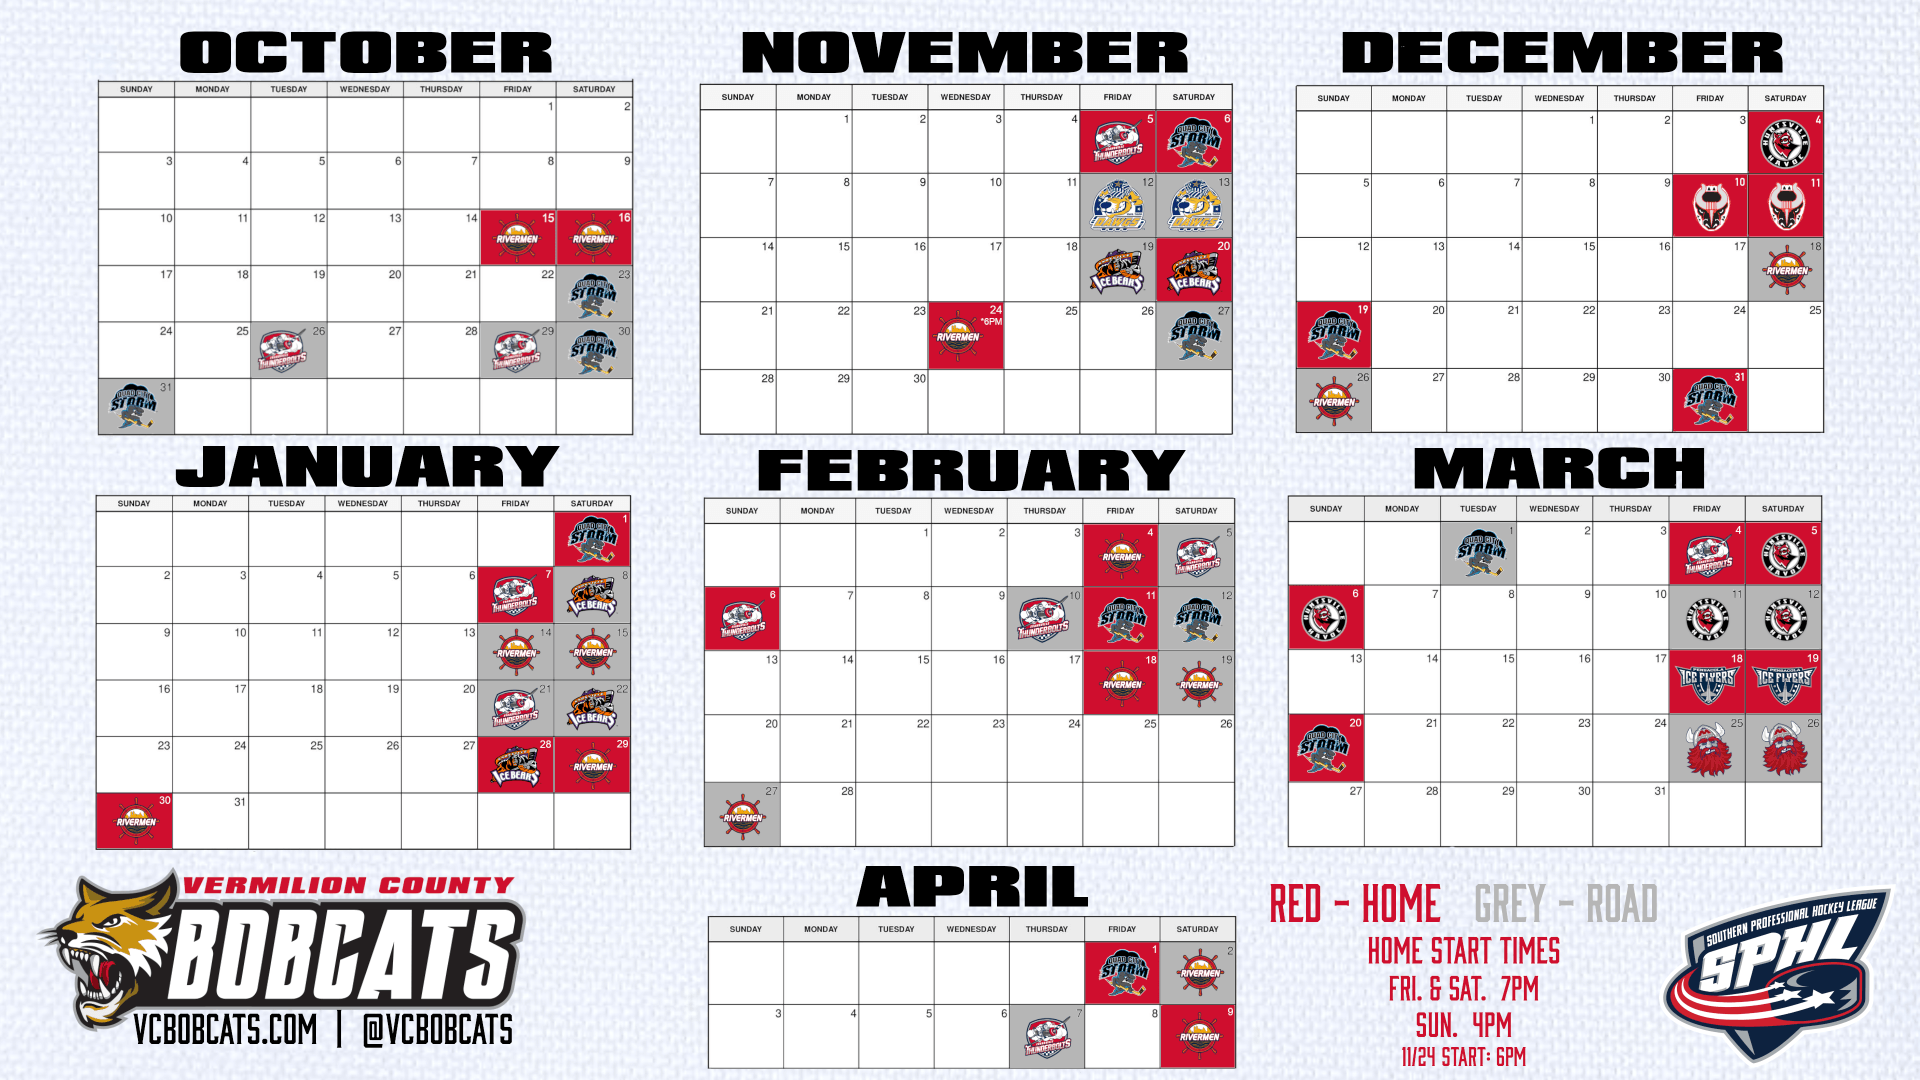 Bobcats release full 202122 season schedule